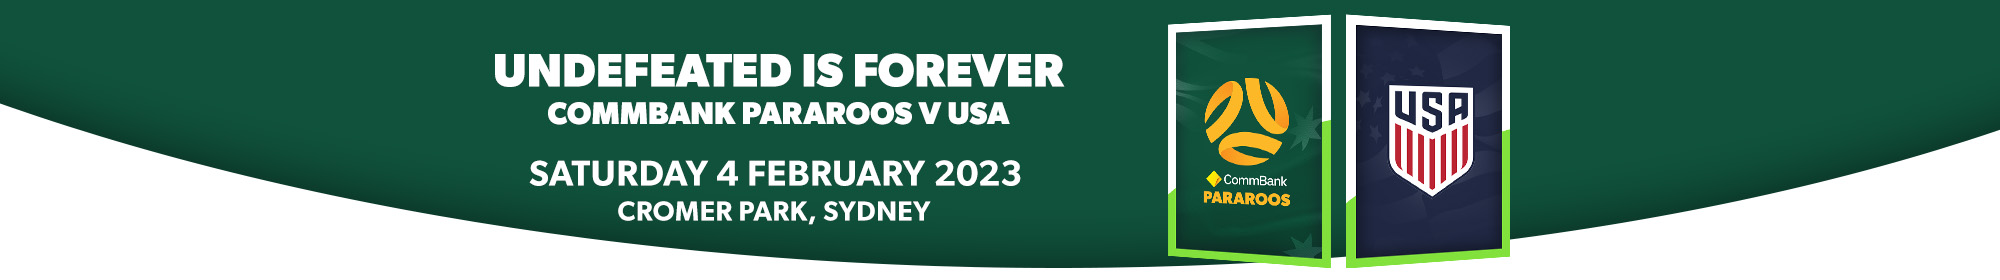 Australia vs USA website banner